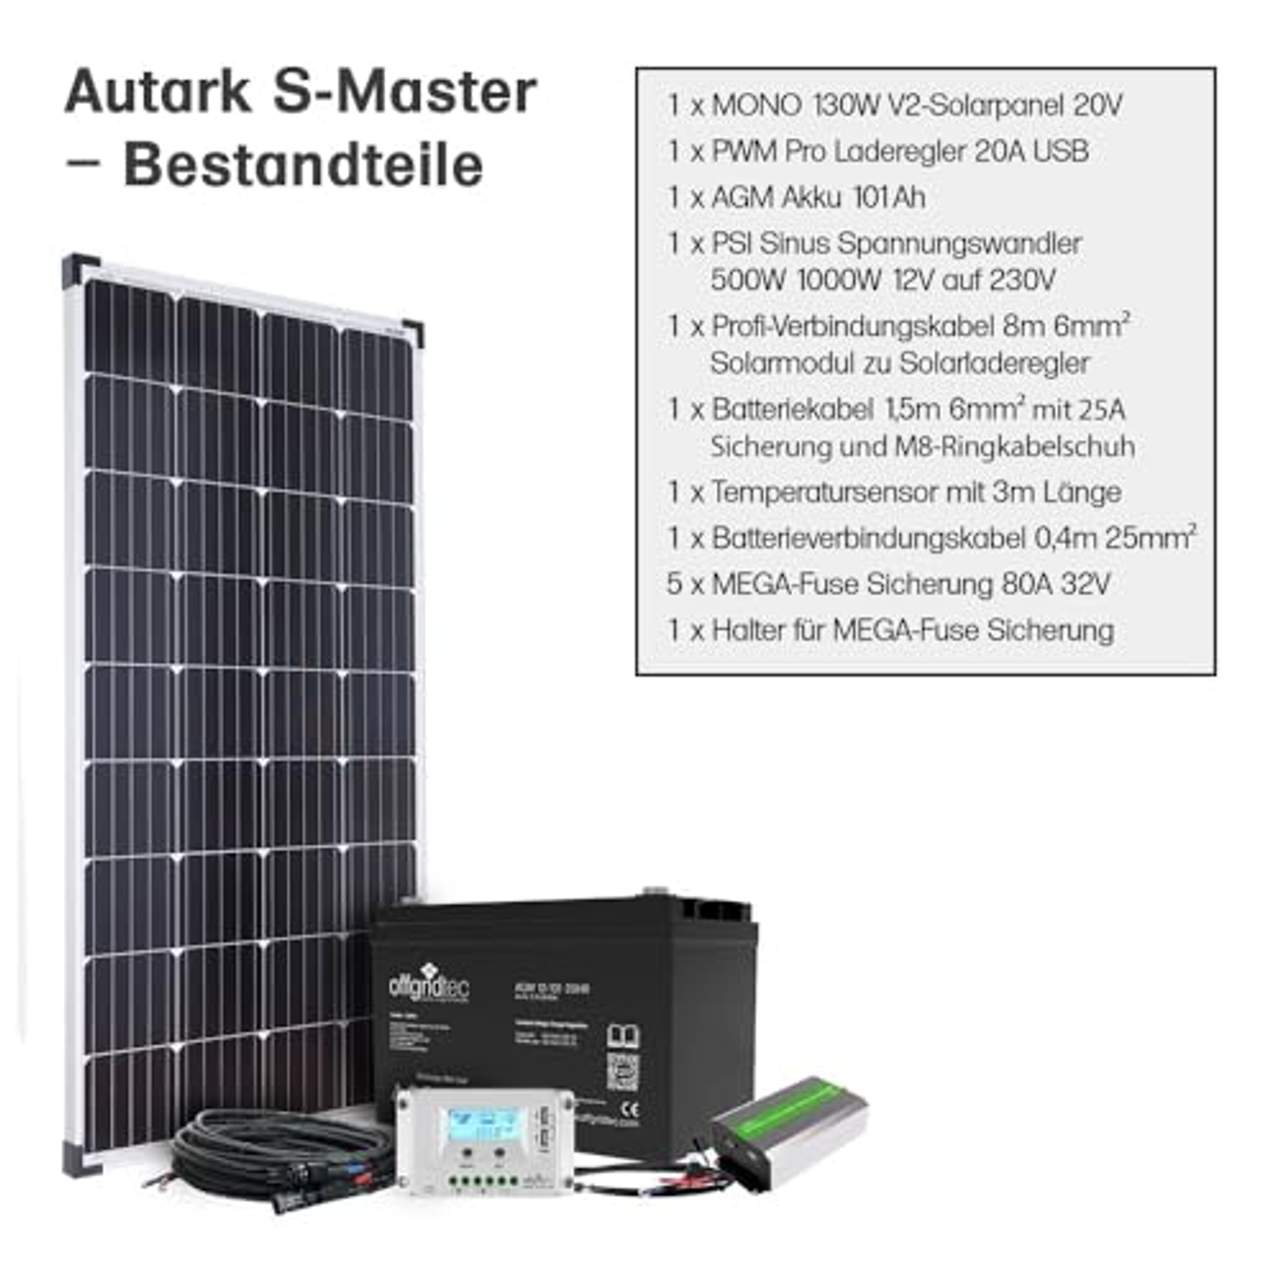 Offgridtec Autark S-Master 130W Solarmodul 101Ah AGM 500W AC Leistung